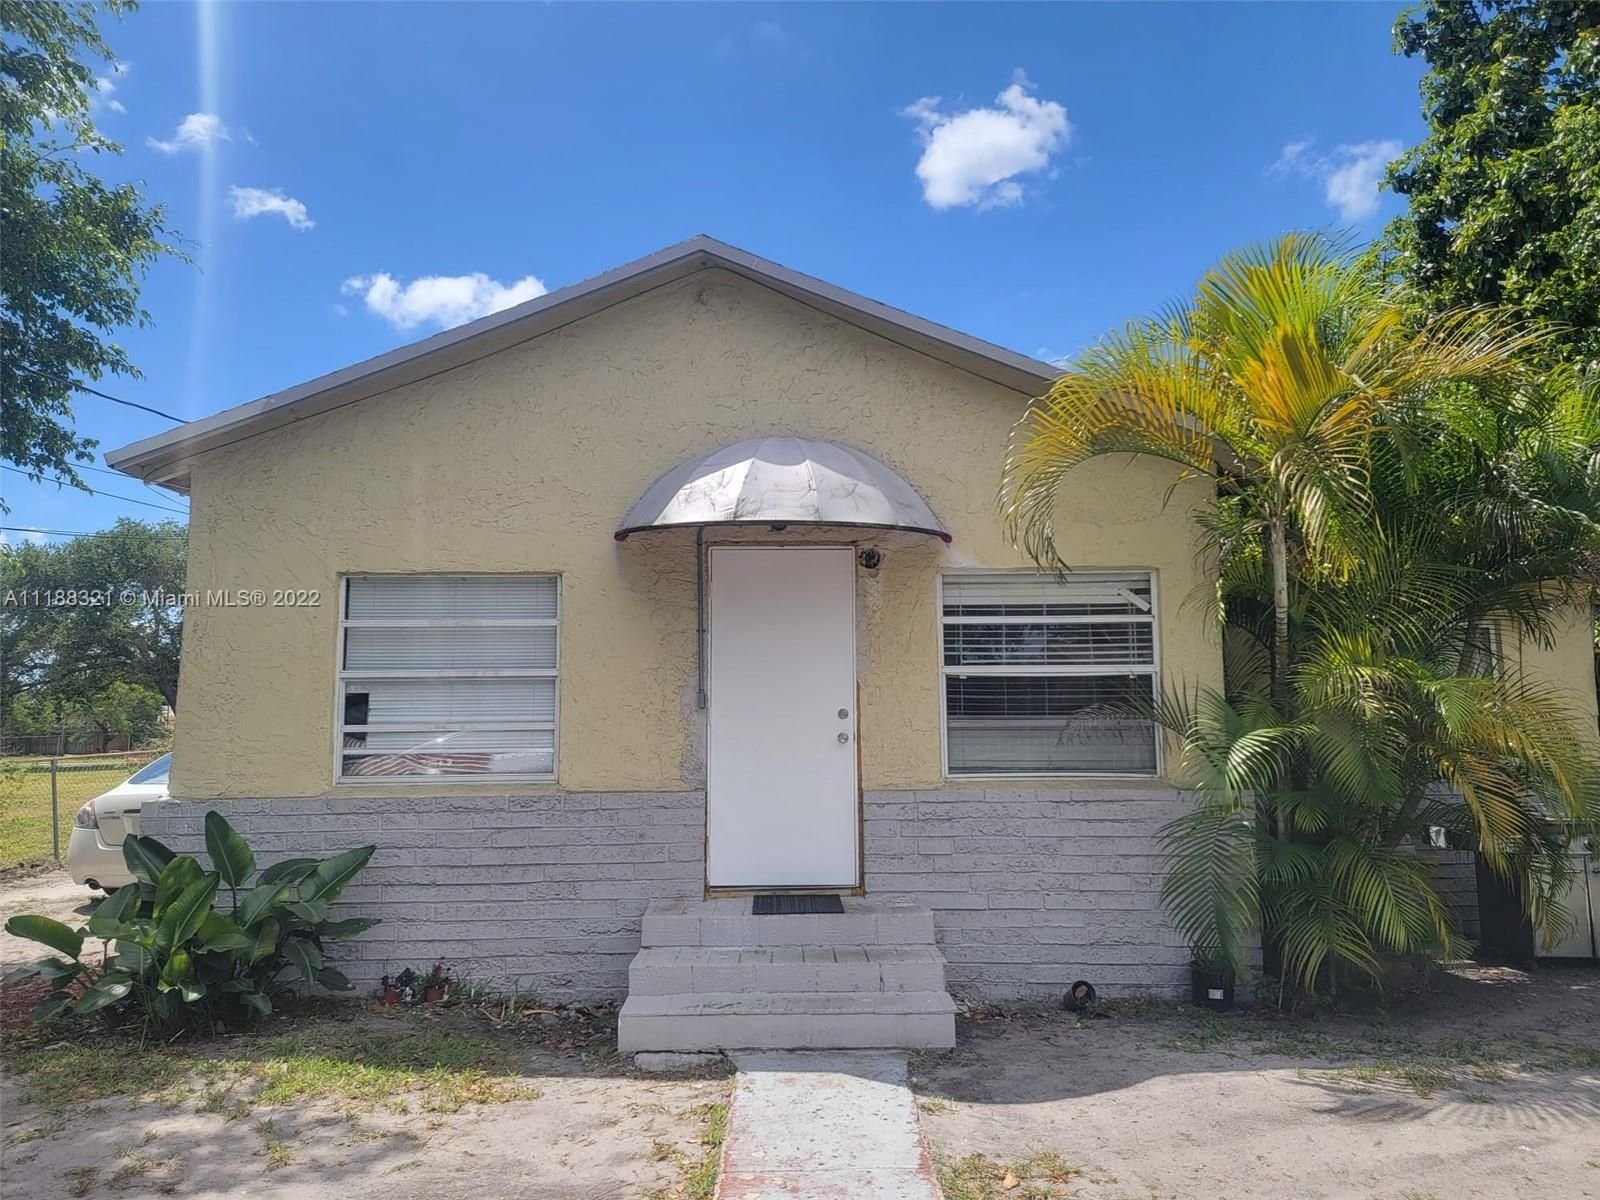 Real estate property located at 2134 80th St, Miami-Dade County, Miami, FL